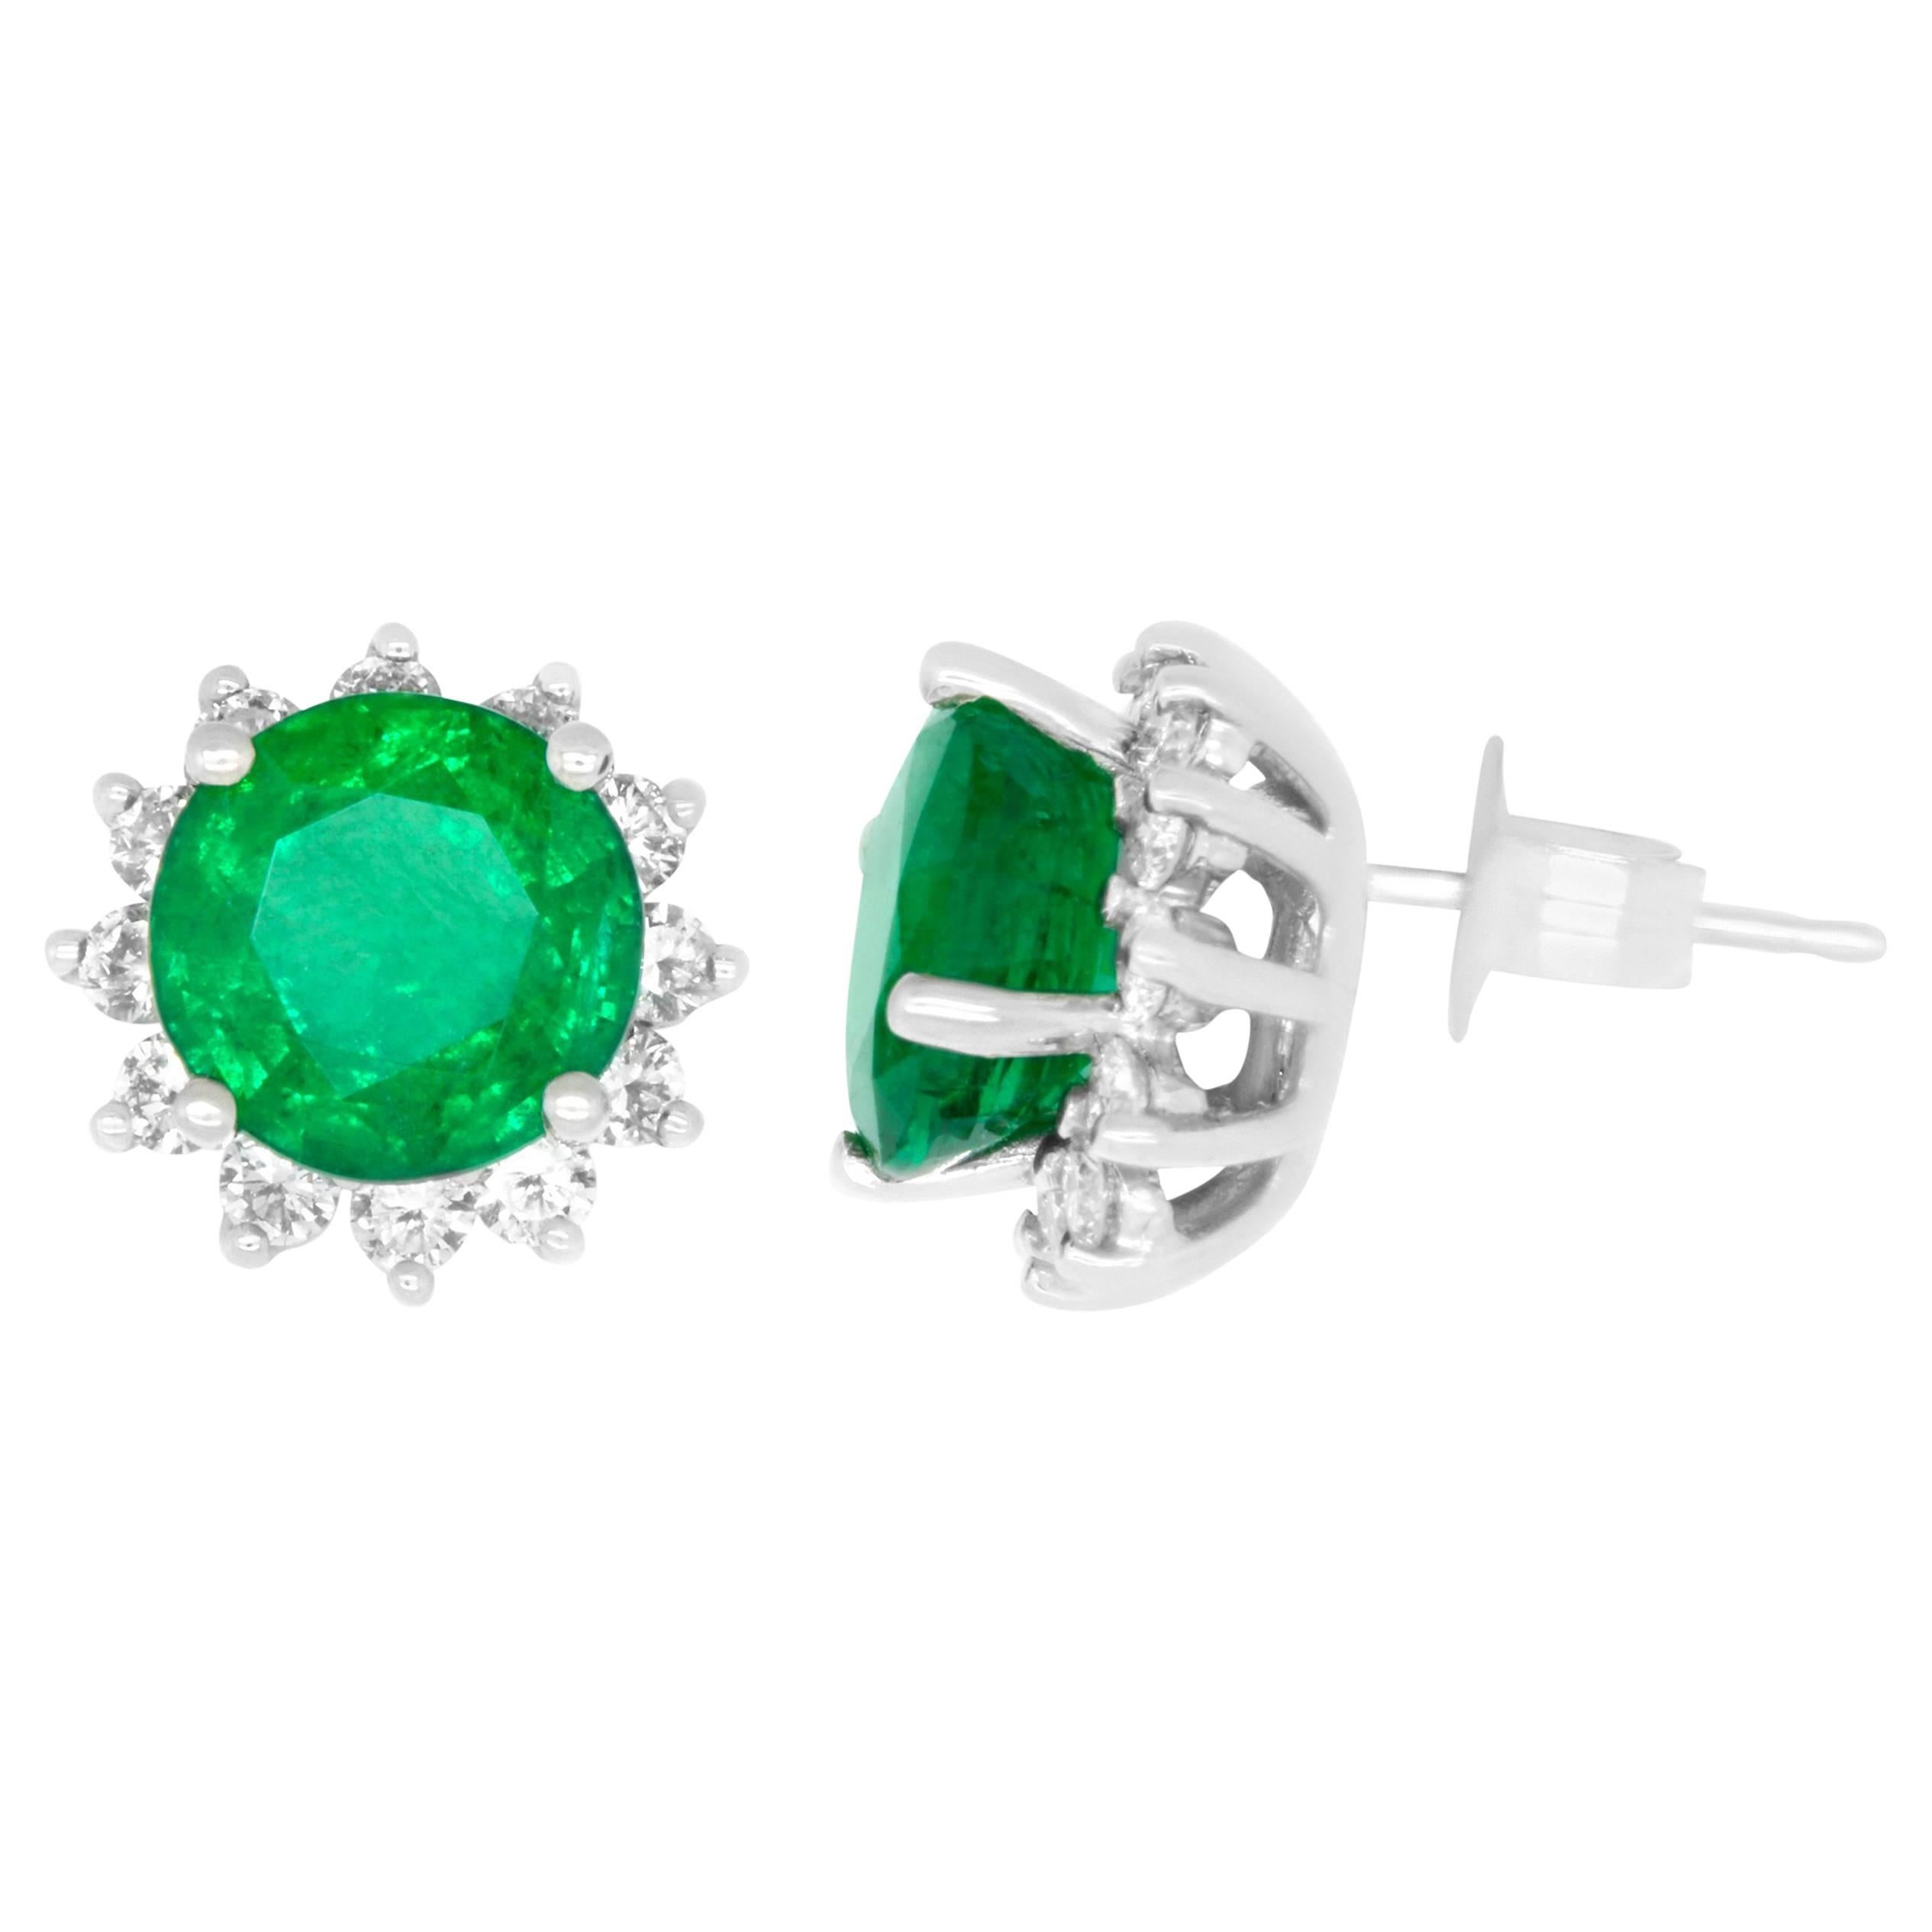 2.32 Carat Round Emerald & 0.98 Carat White Diamond Stud Earring